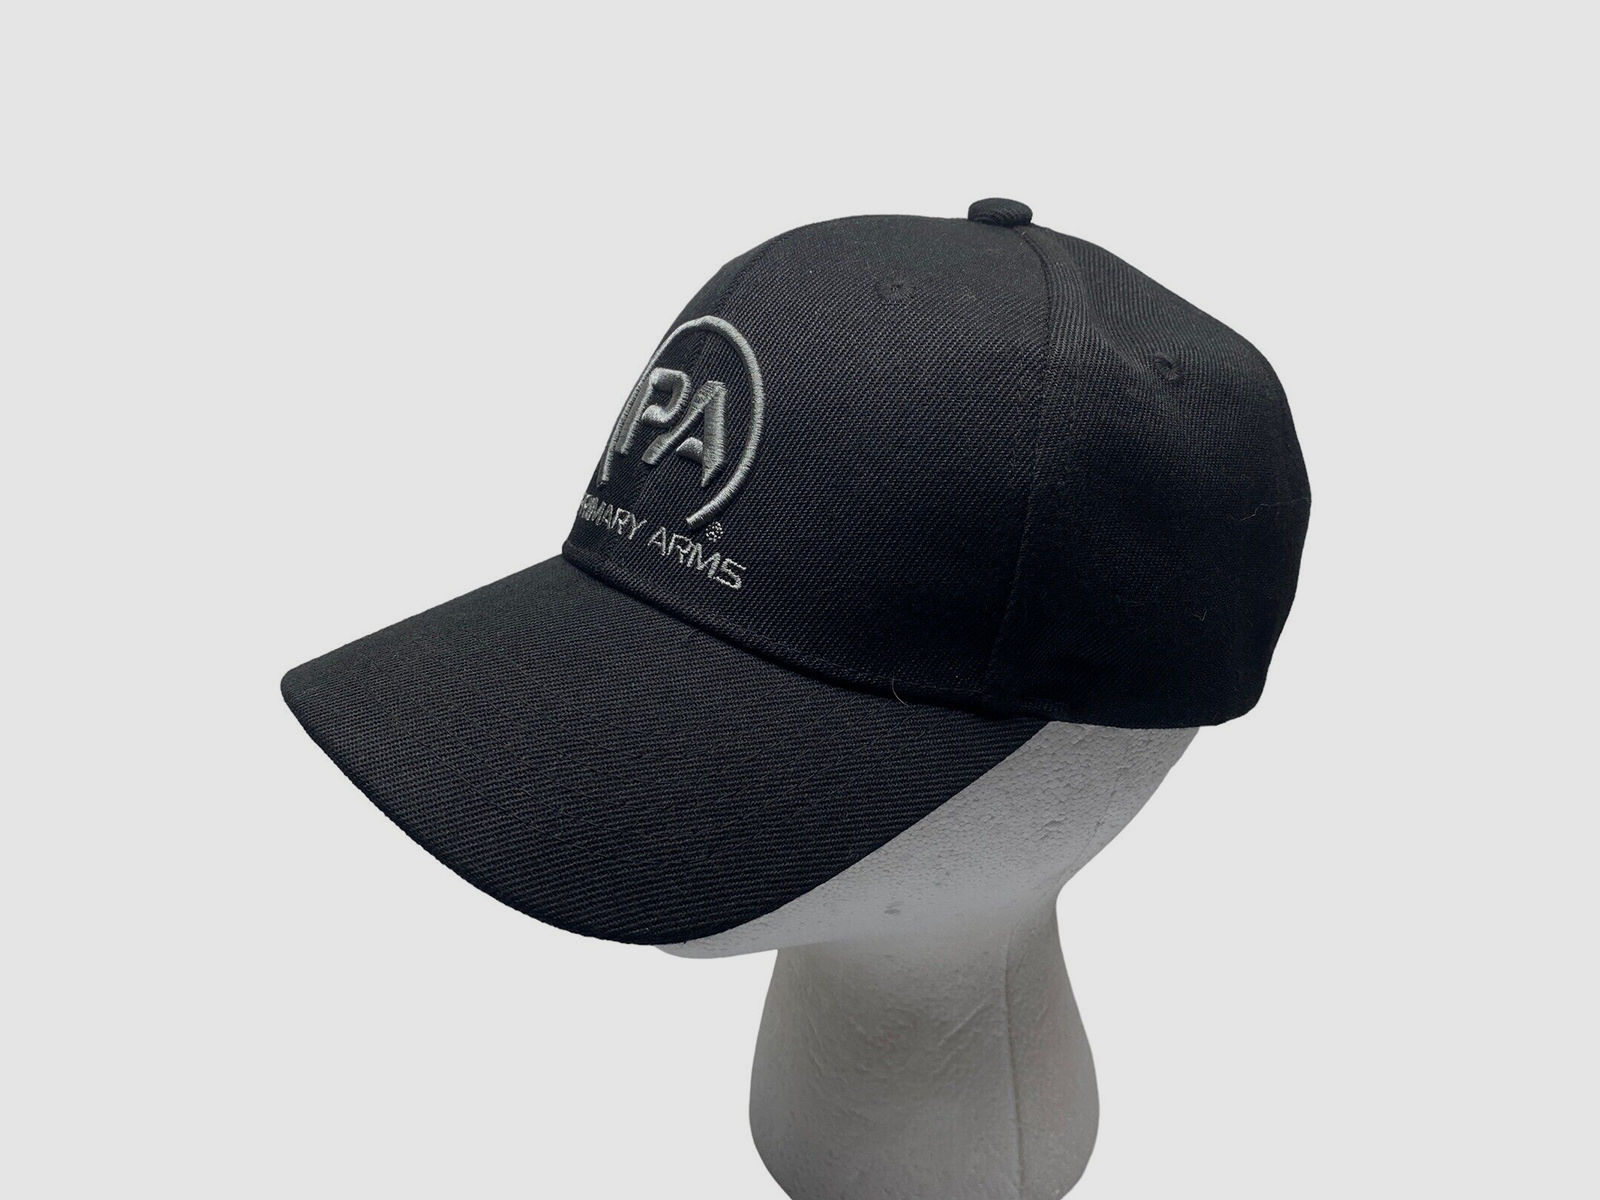 Primary Arms Basecap mit Logo schwarz onesize